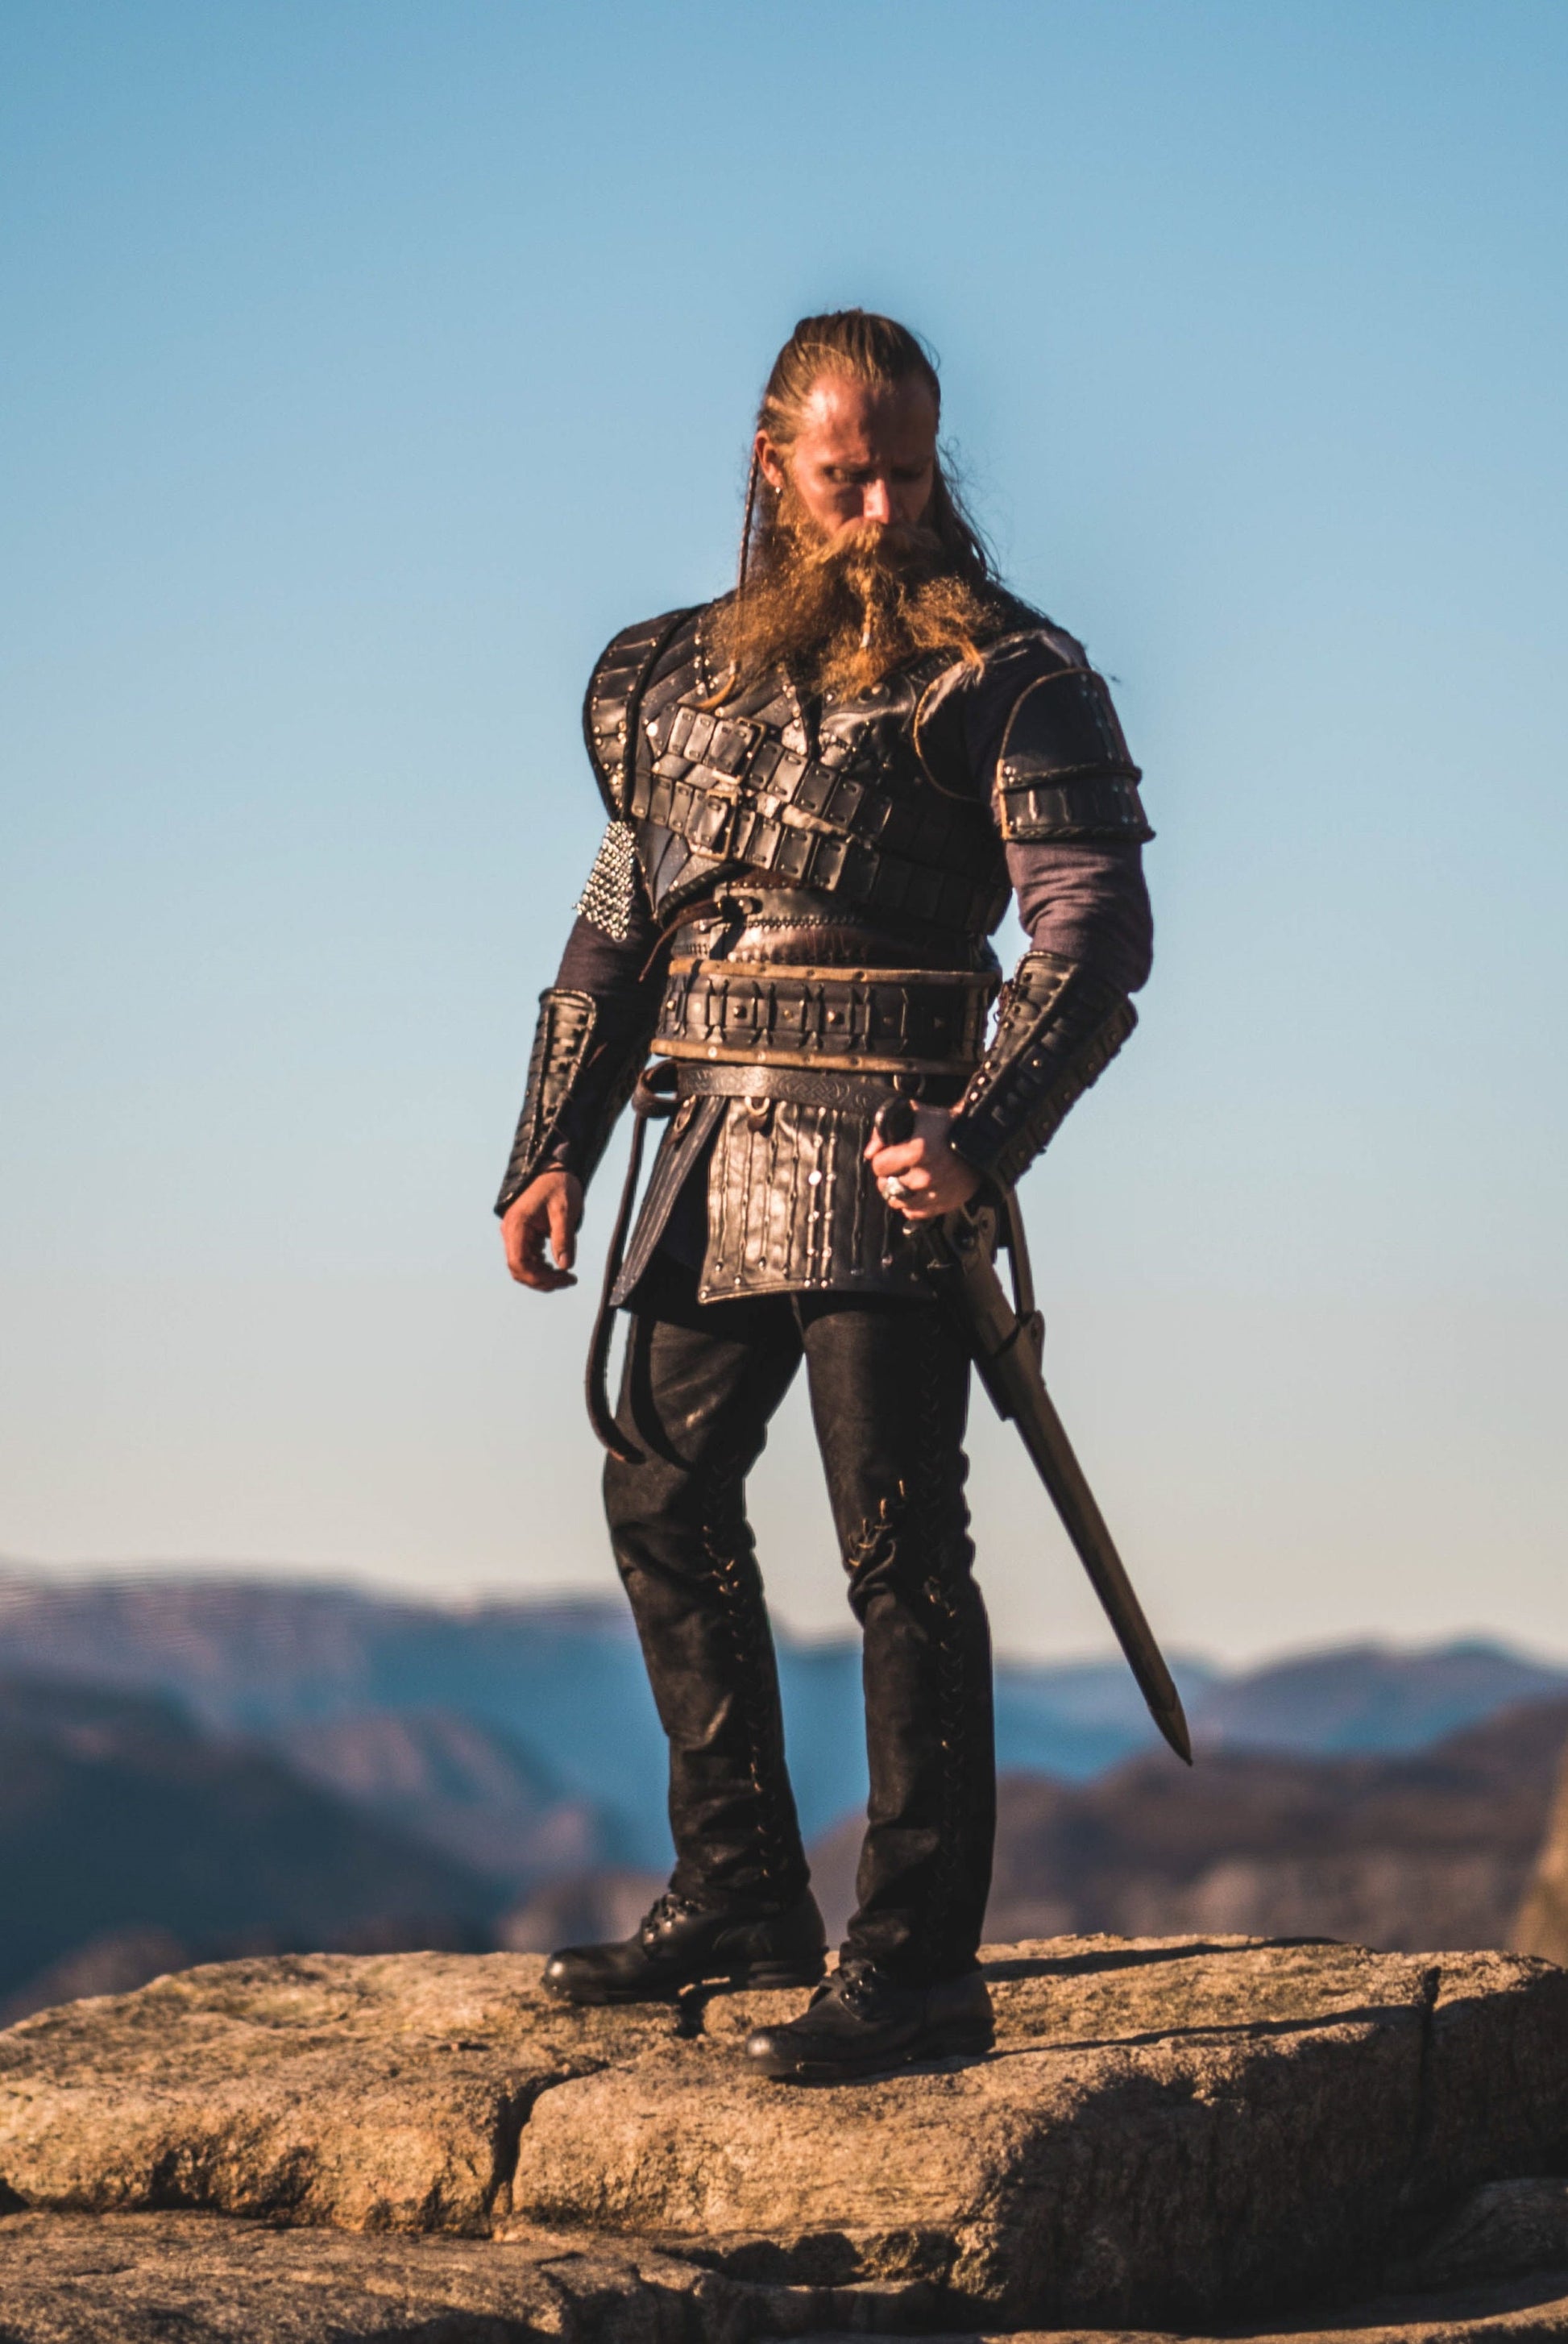 Ivar the Boneless: Viking Warrior by Press, University